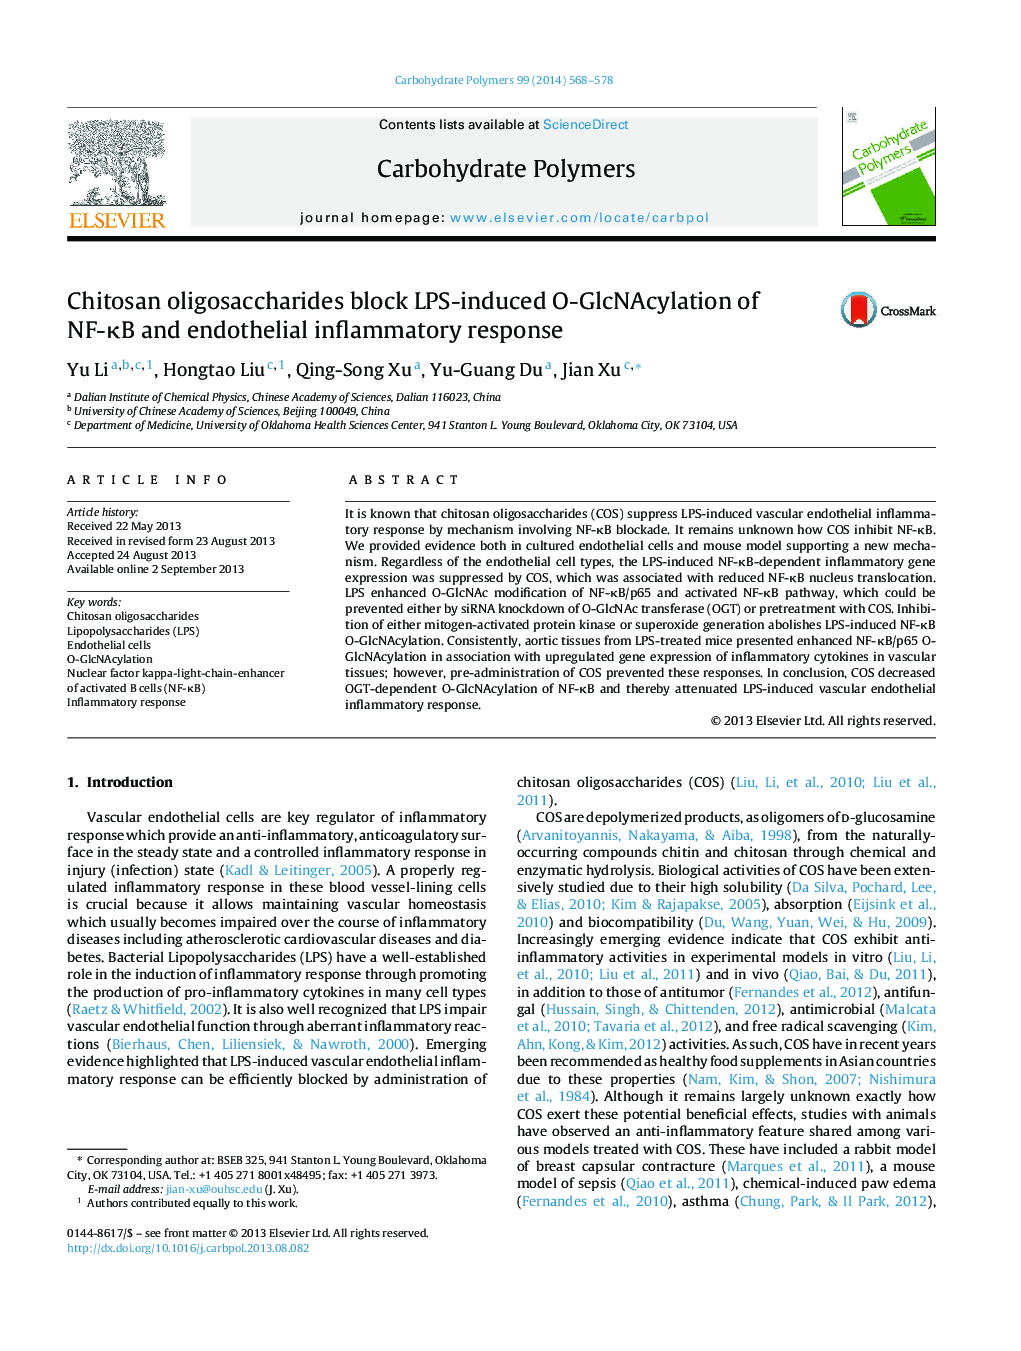 Chitosan oligosaccharides block LPS-induced O-GlcNAcylation of NF-ÎºB and endothelial inflammatory response